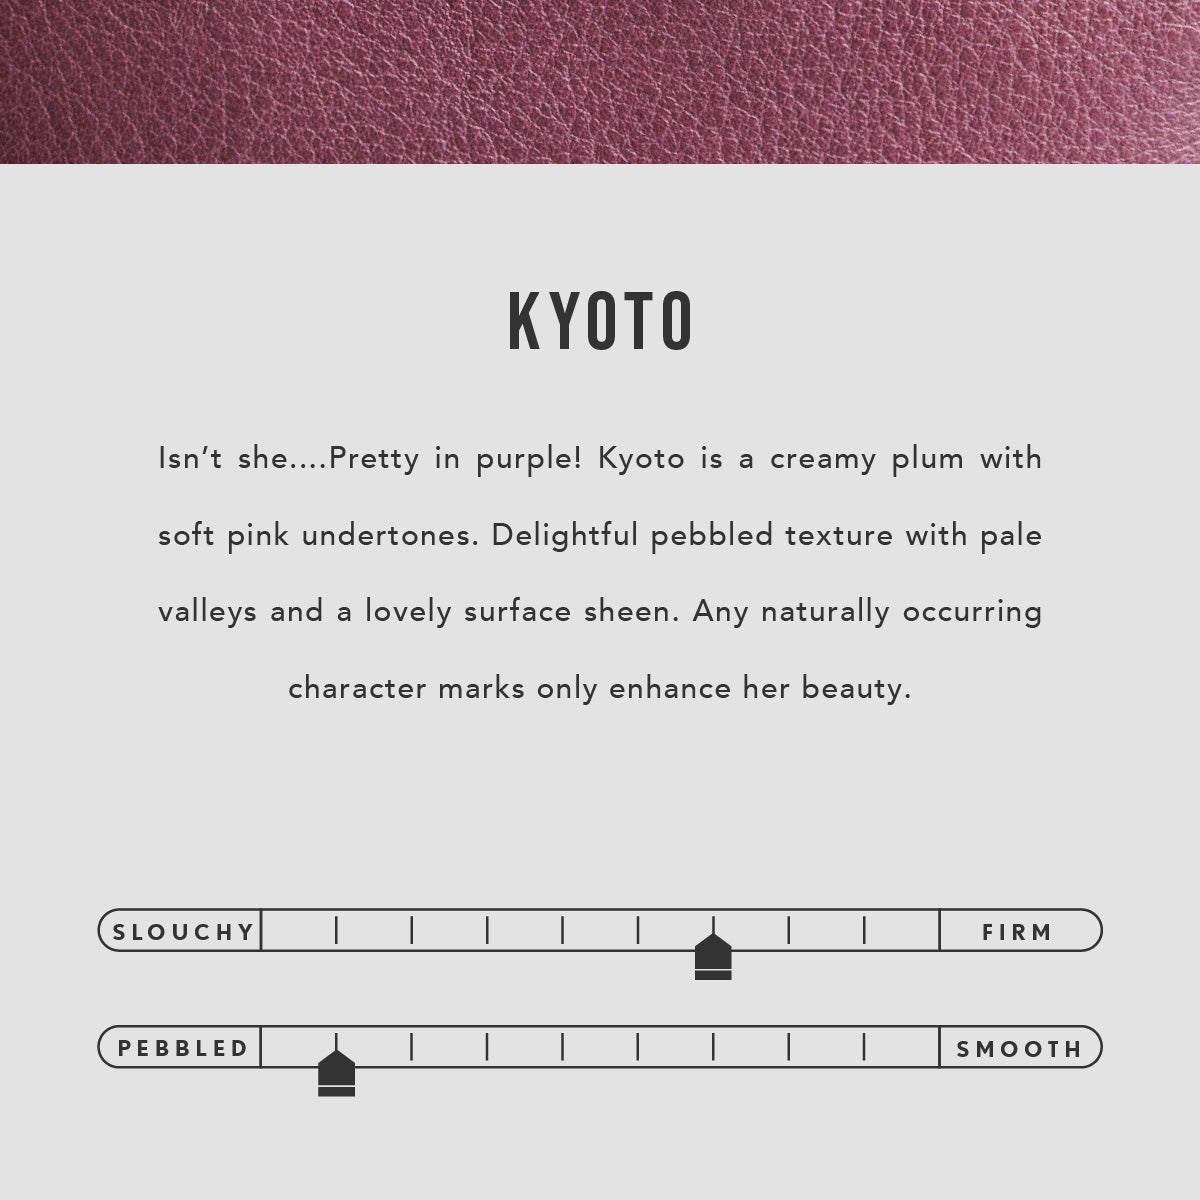 Kyoto | infographic